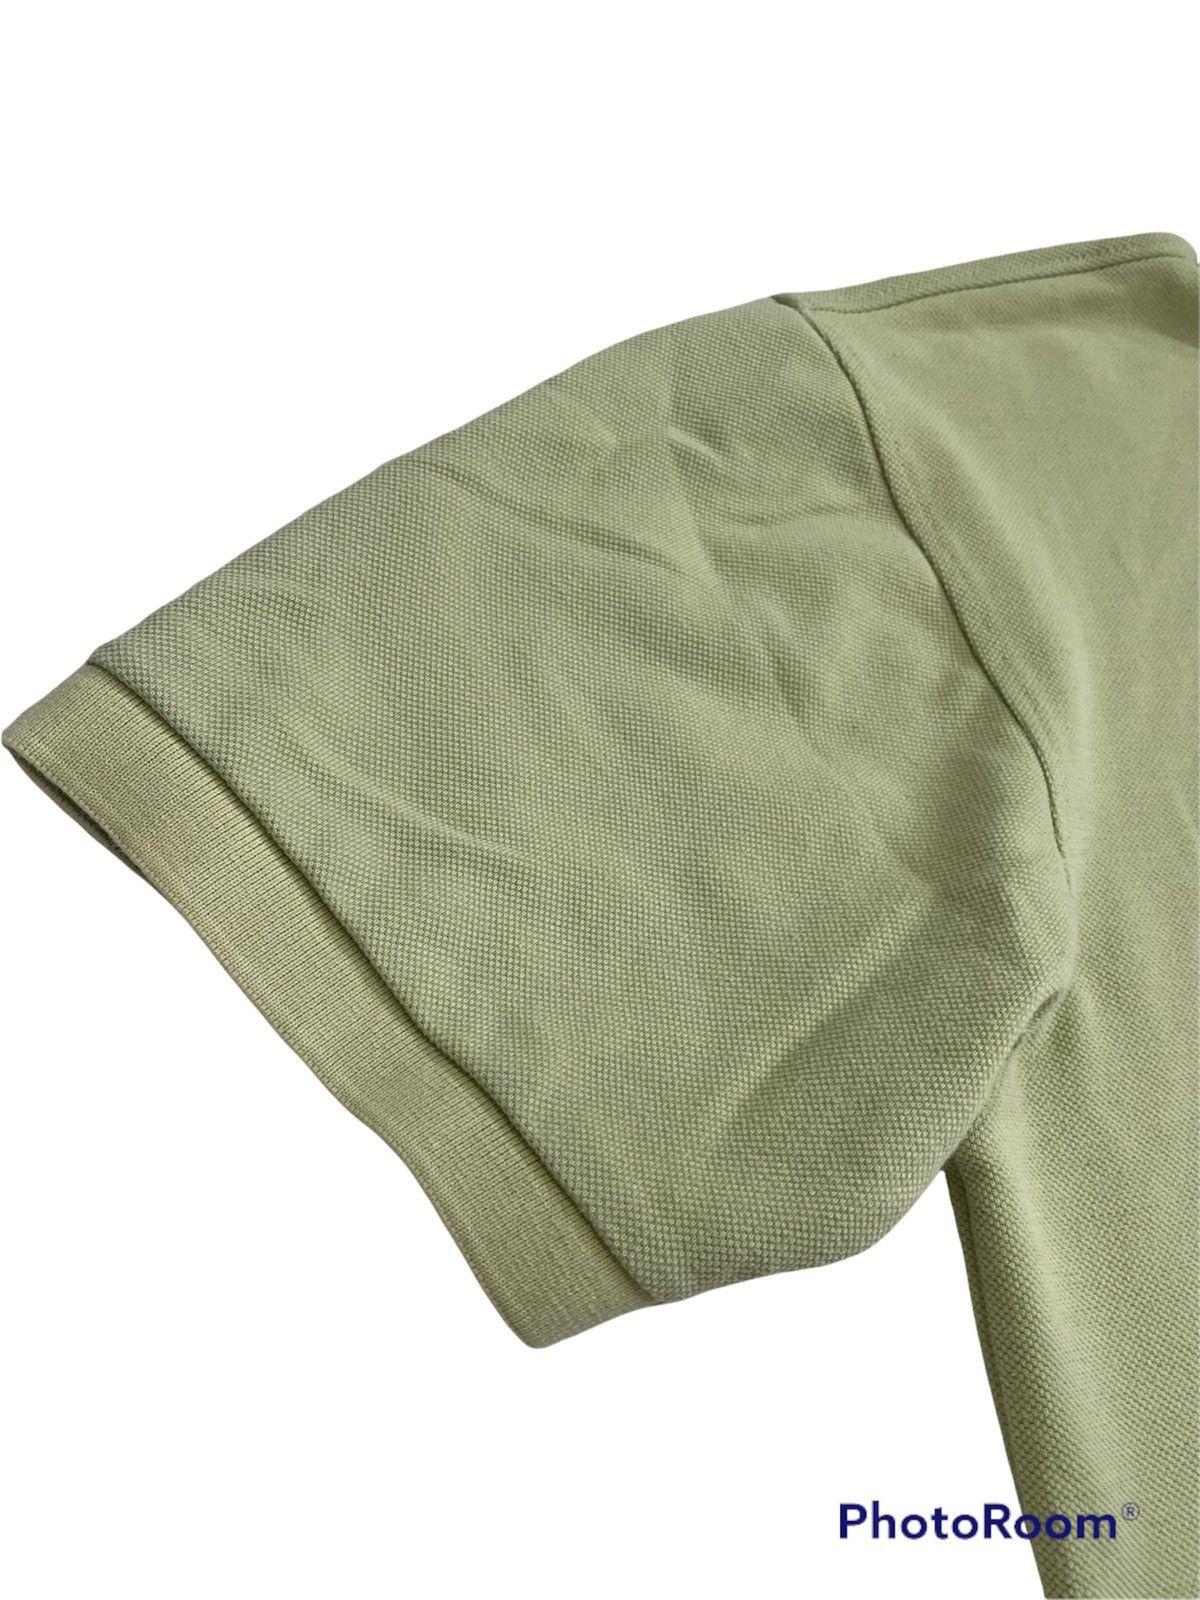 Burberry Burberry London green polo shirt men’s size xxl Size US XXL / EU 58 / 5 - 4 Thumbnail